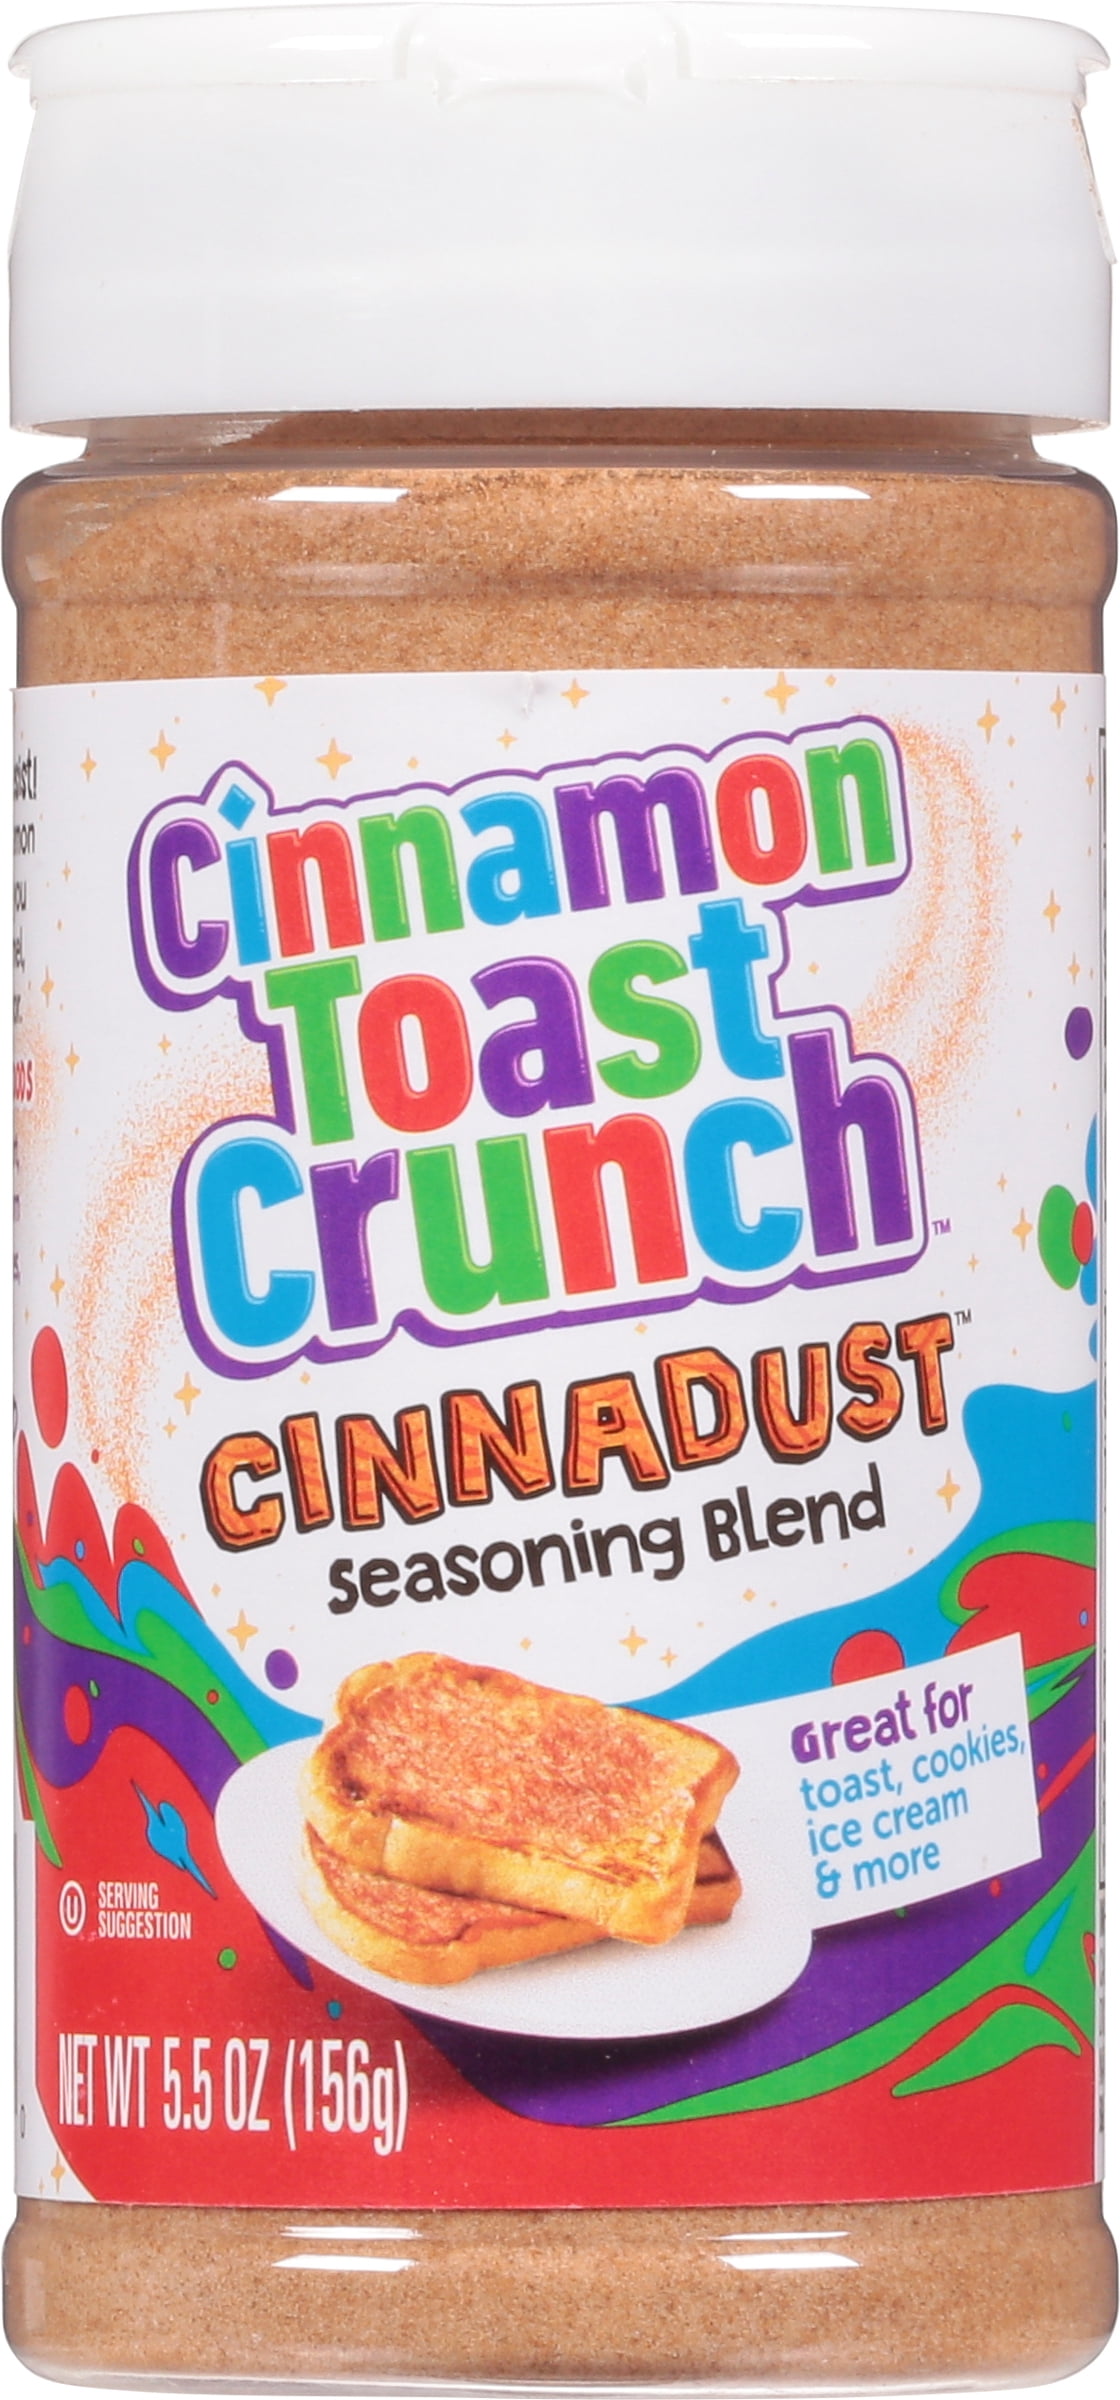 Cinnamon Toast Crunch Cinnadust Seasoning Blend, 3.5 oz - Kroger